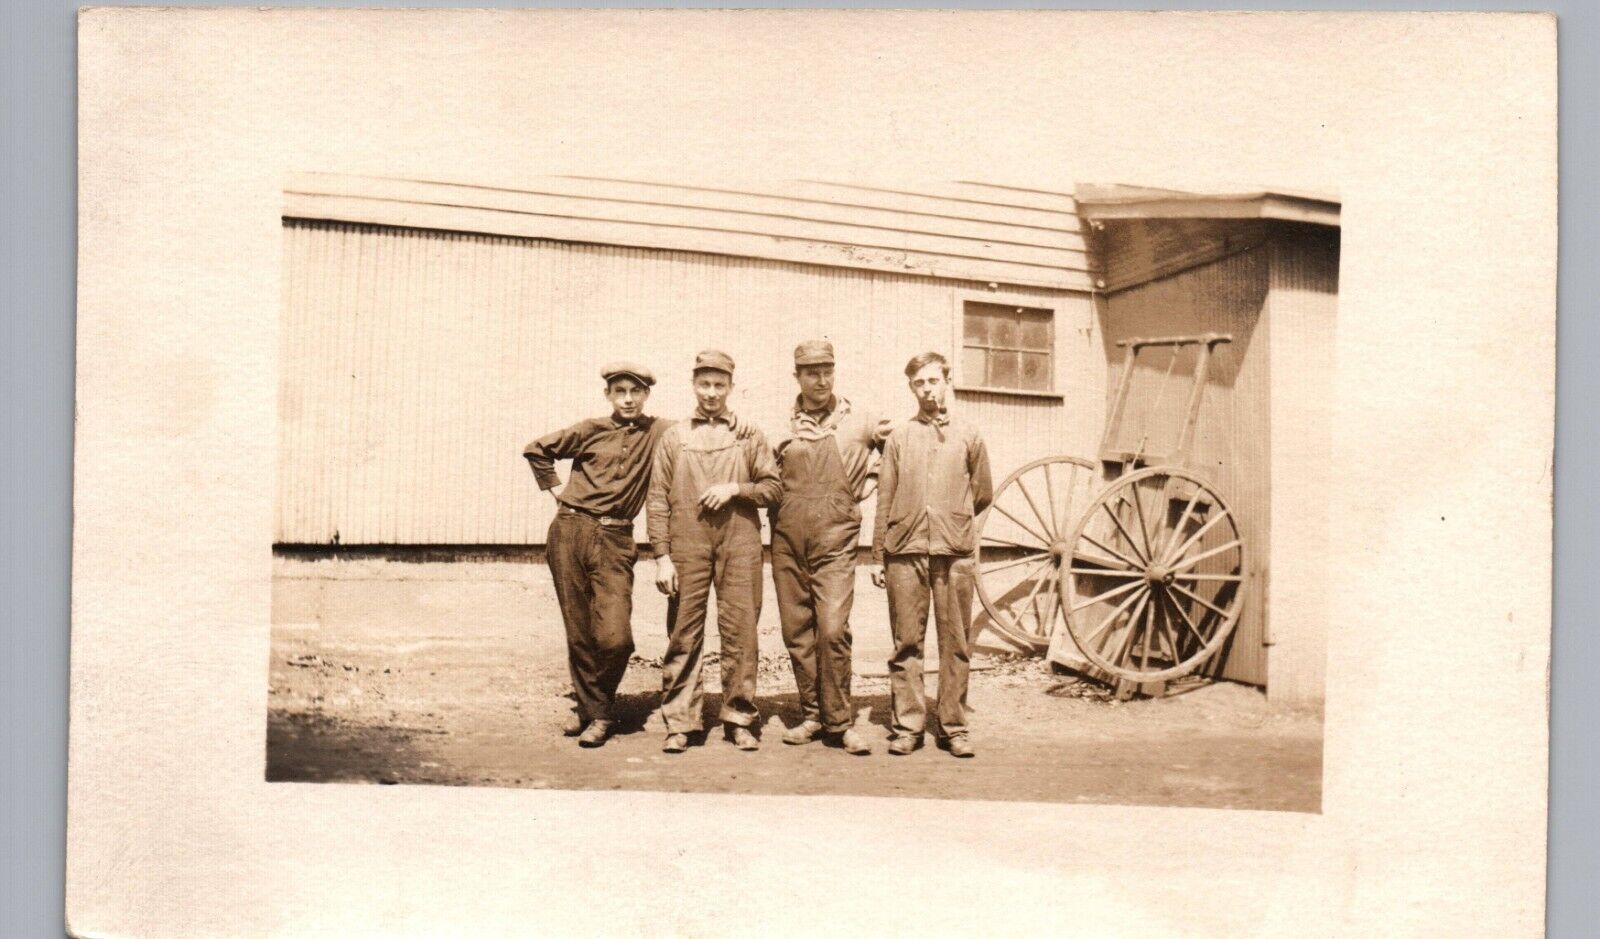 OCCUPATIONAL WORK CREW c1910 real photo postcard rppc railroad? factory?